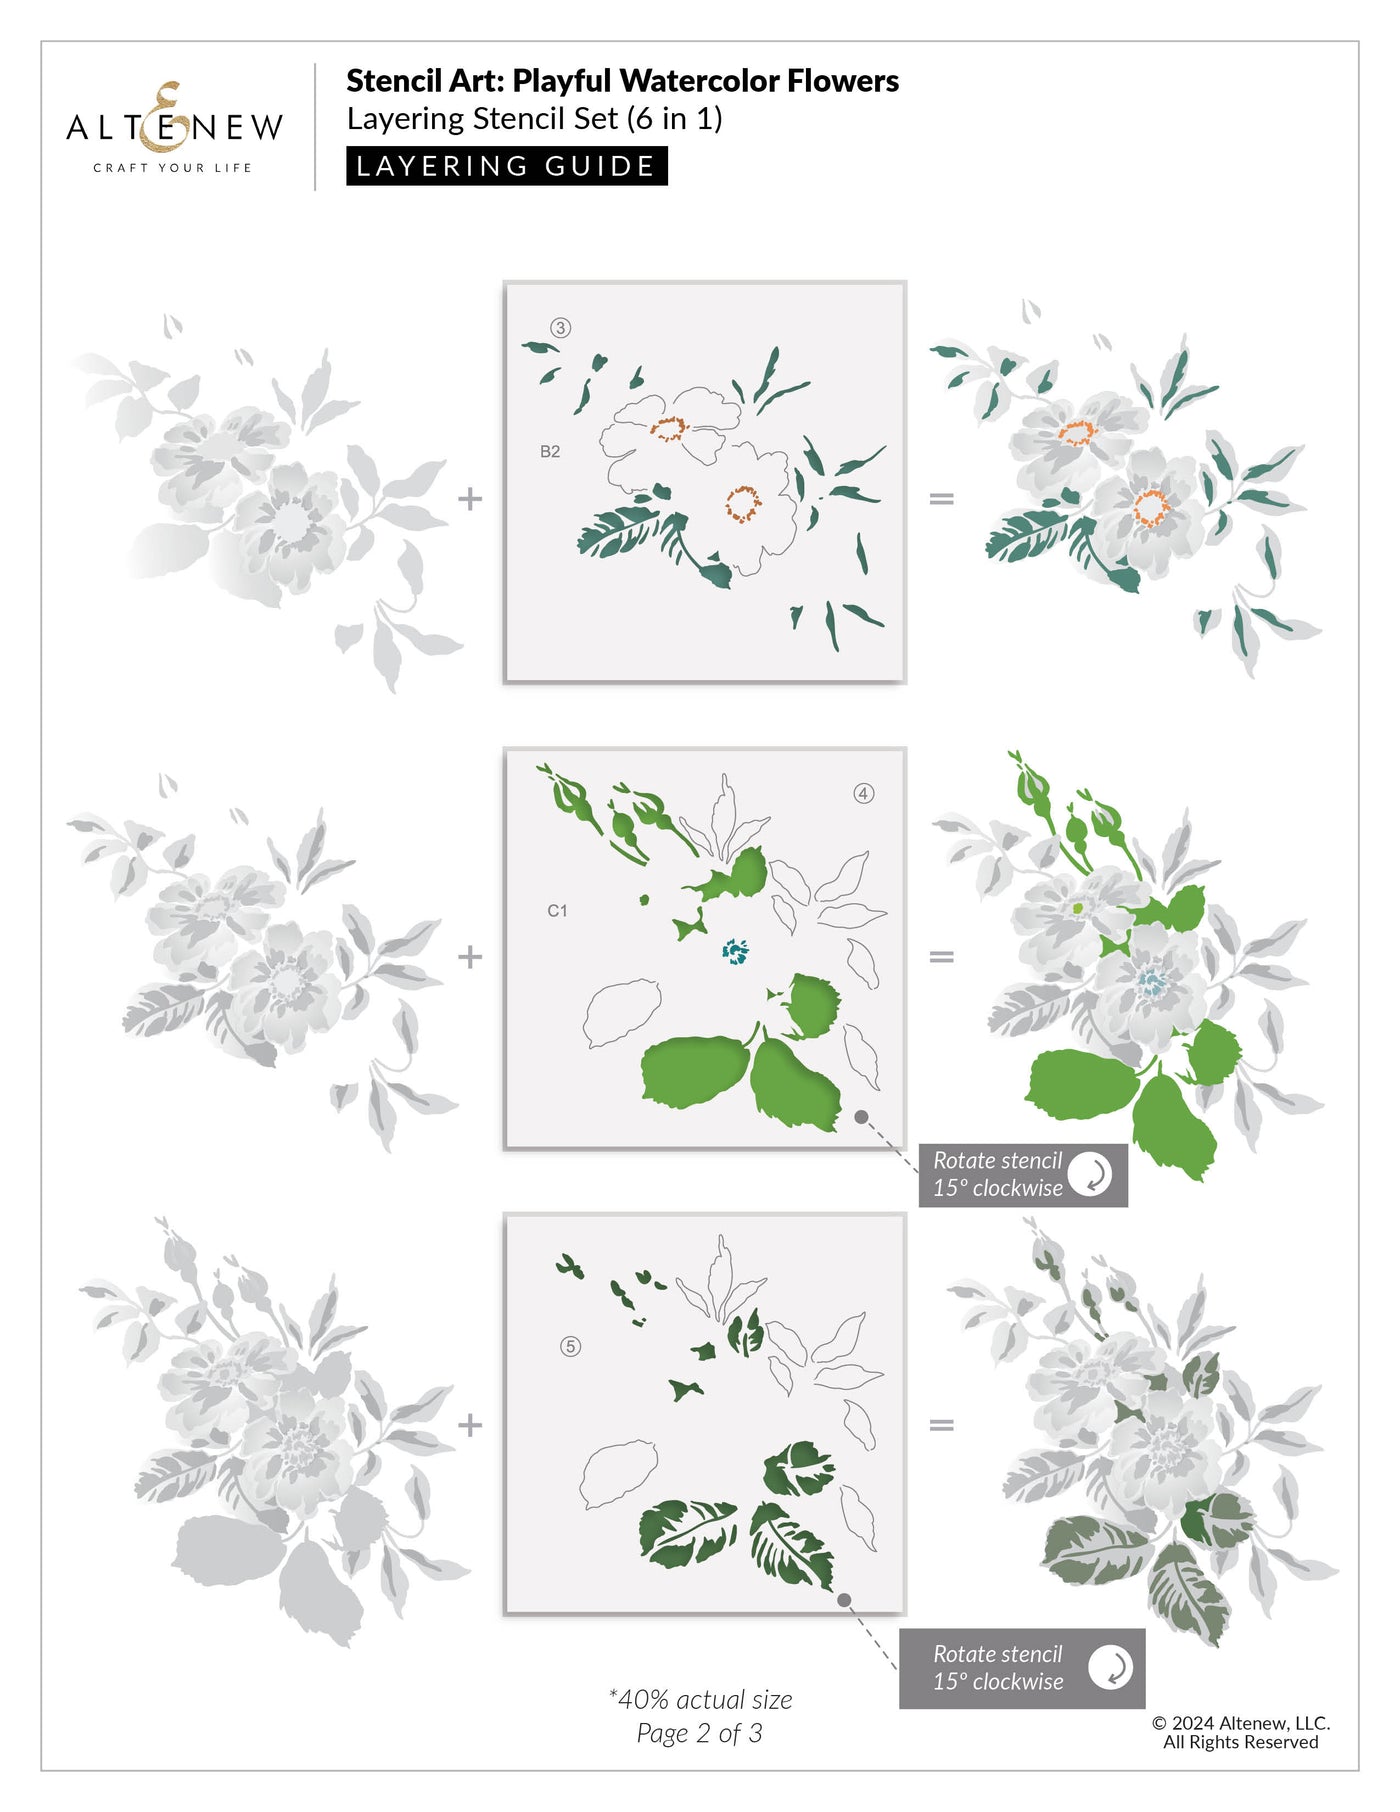 Stencil Stencil Art: Playful Watercolor Flowers Layering Stencil Set (6 in 1)